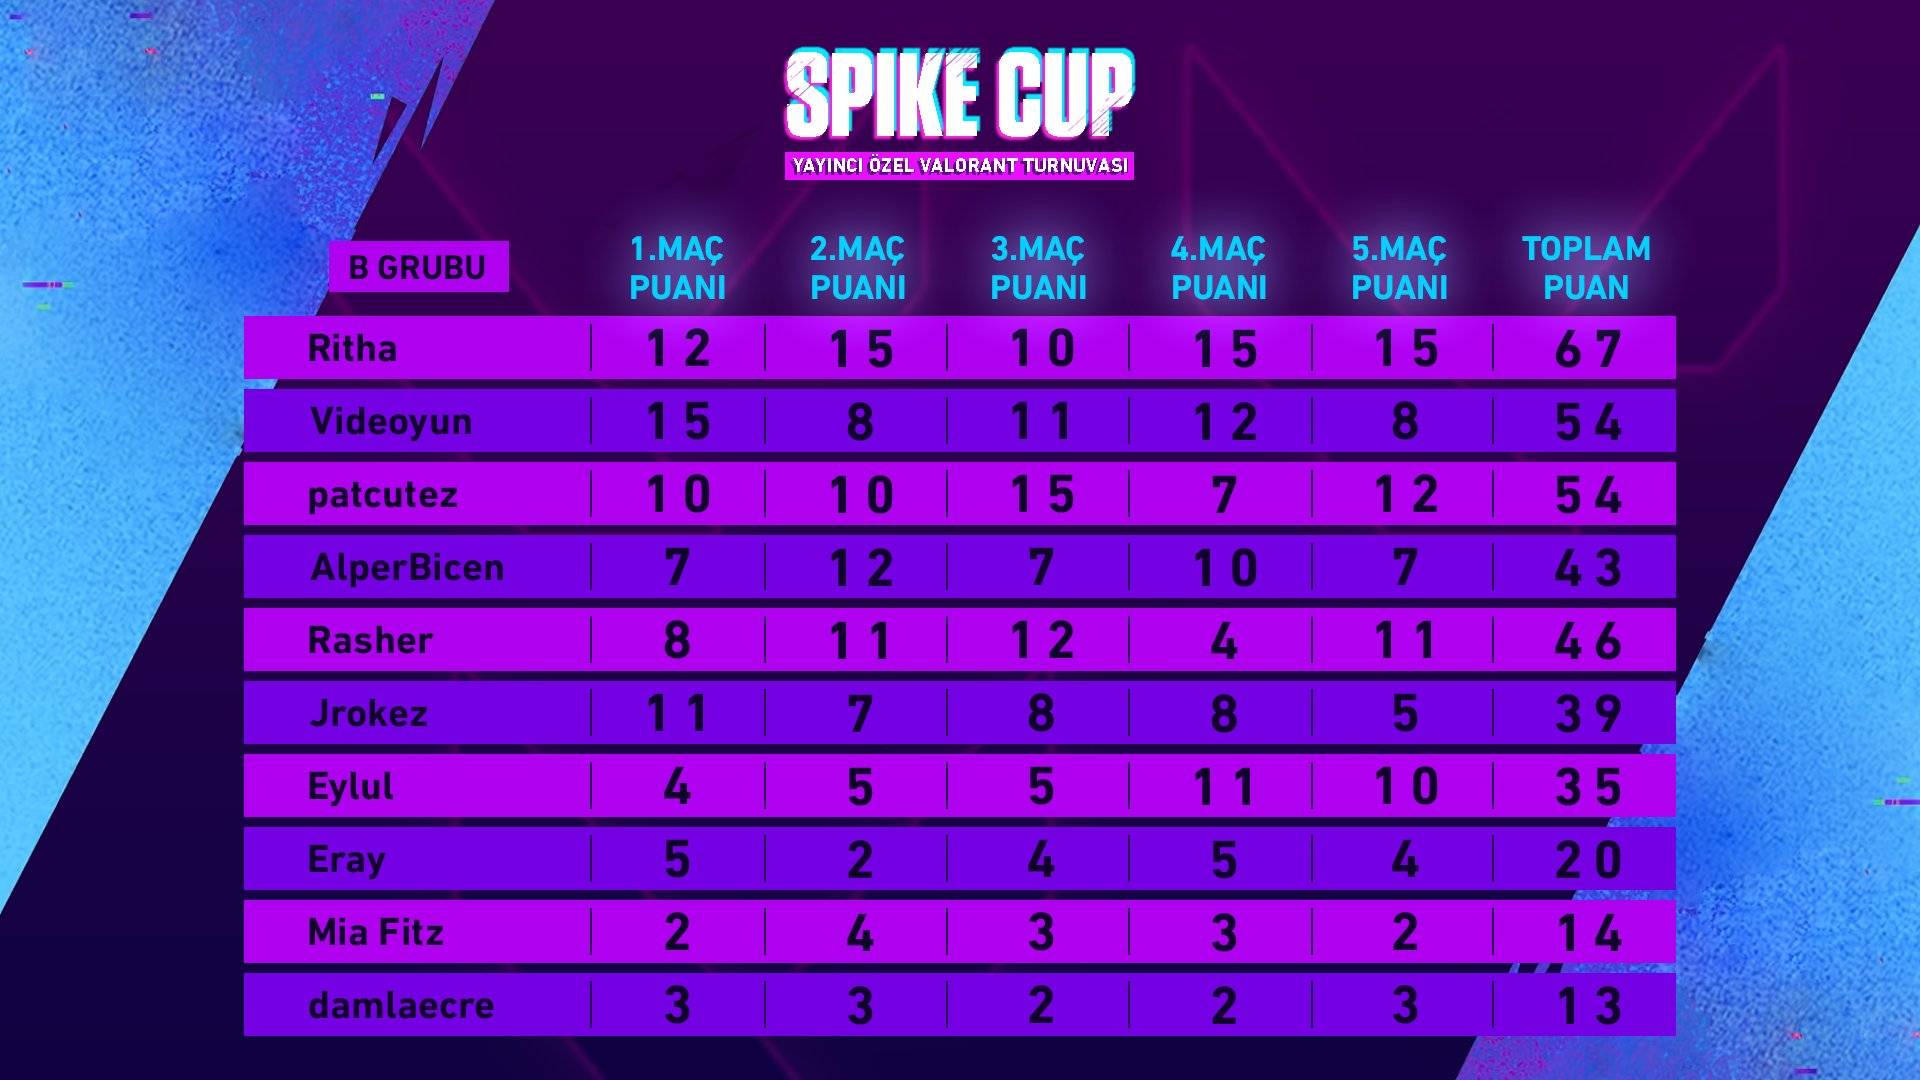 Spike Cup b